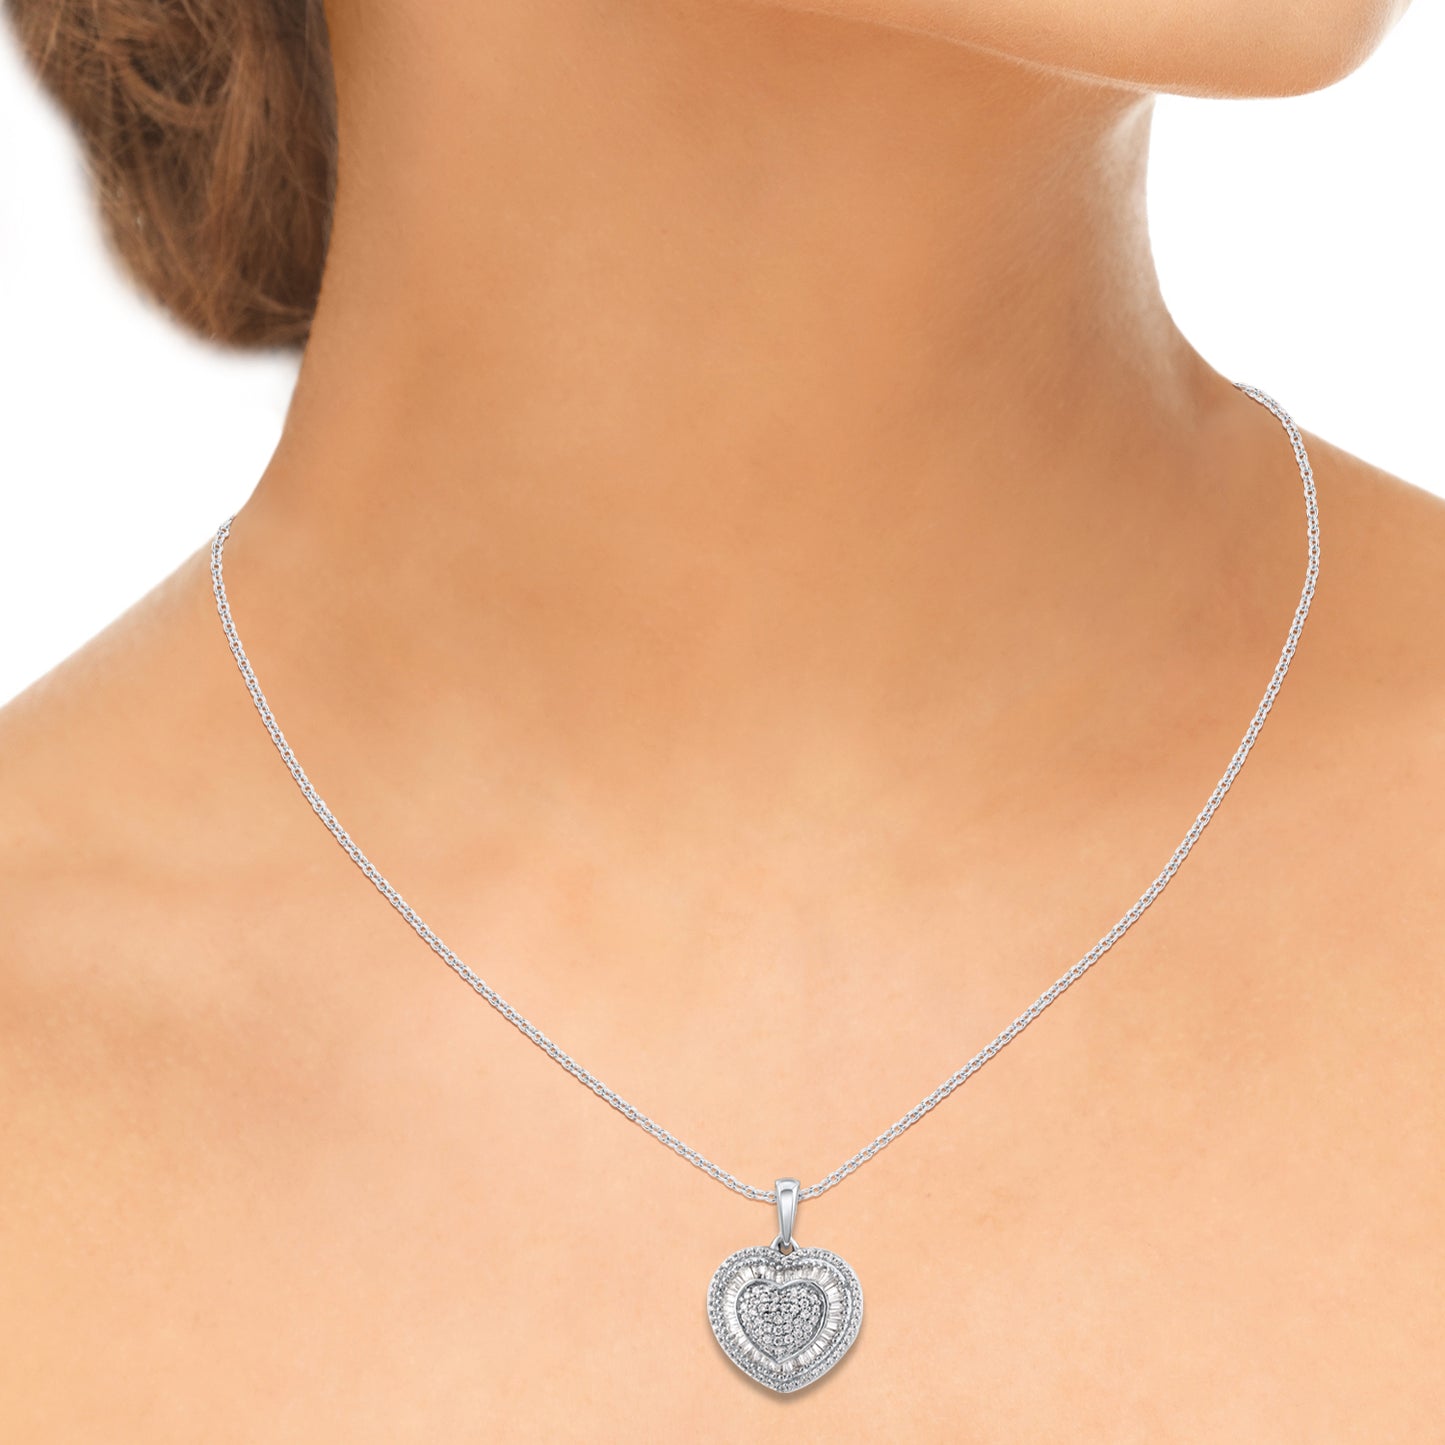 Baguette Sunburst Ballerina Heart Pendant Necklace in 925 Sterling Silver